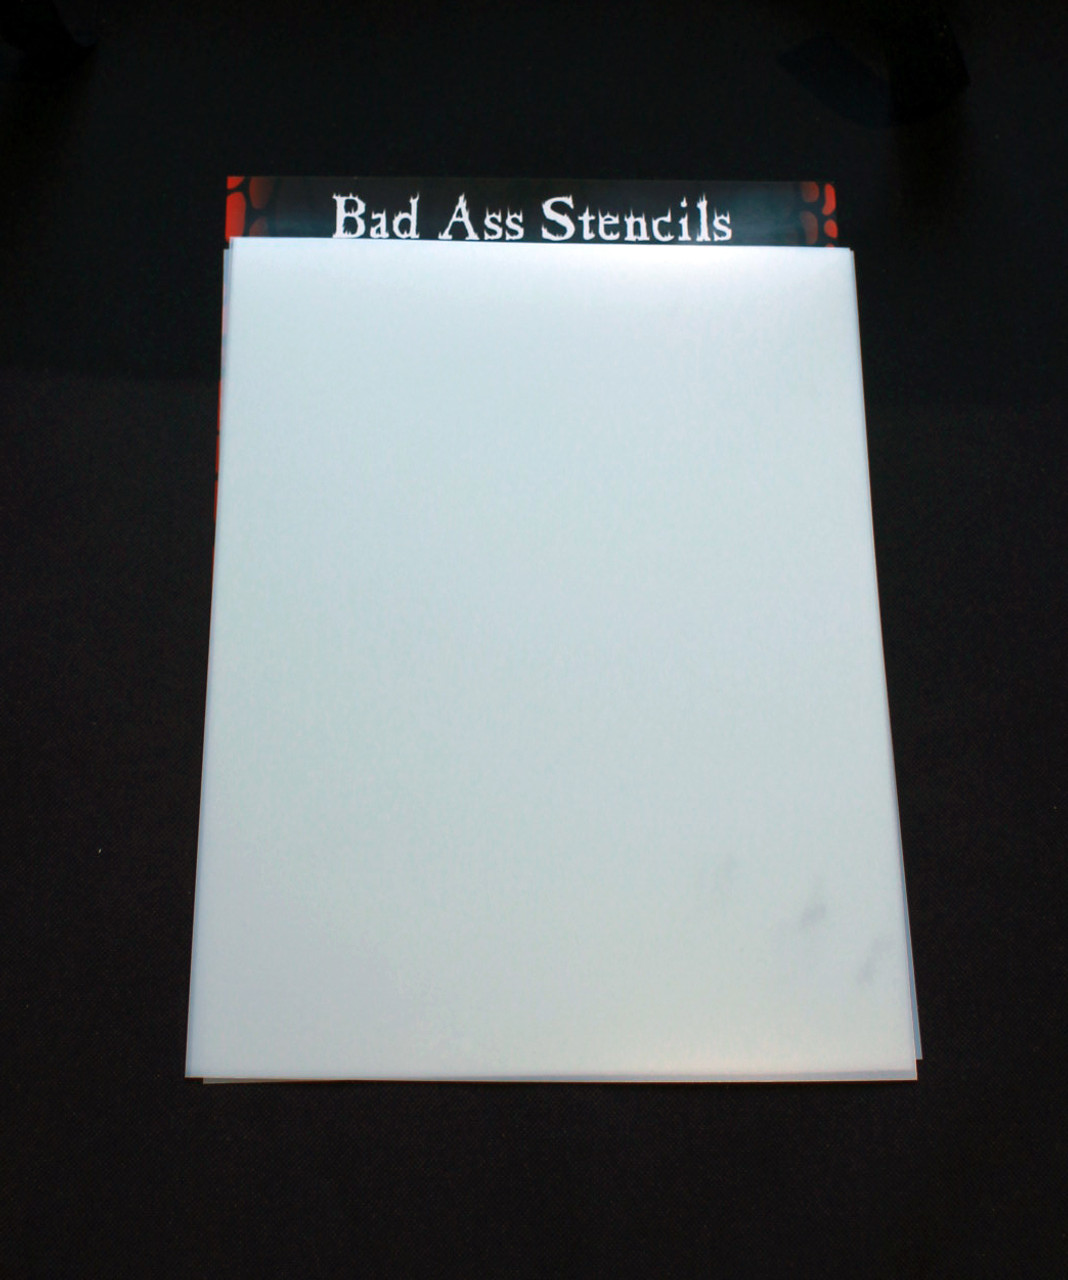 blank mylar stencil sheets 18 x 24 (4 sheets) - iStencils